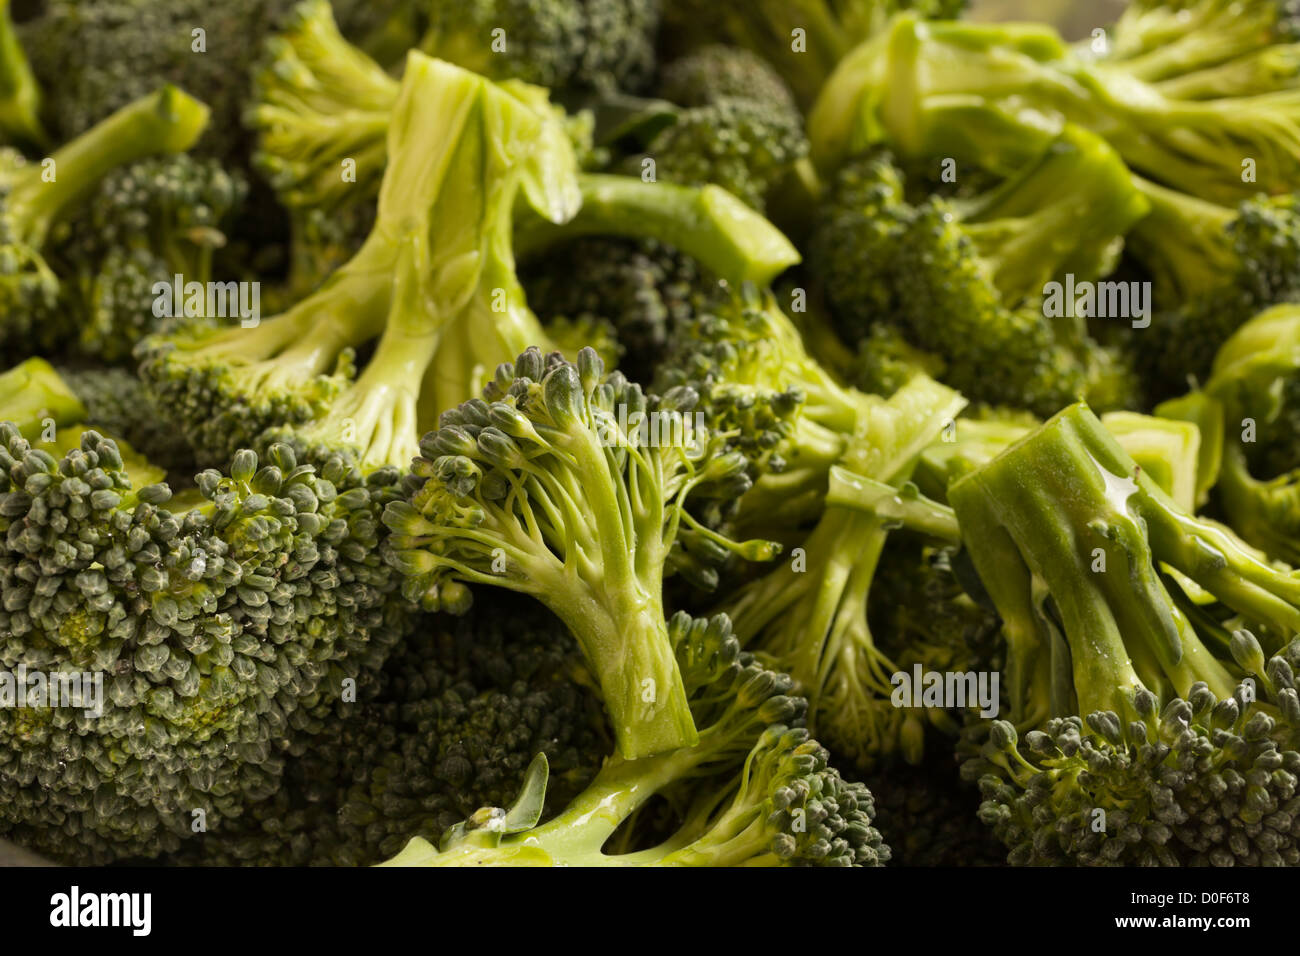 Raw florets of Broccoli Stock Photo